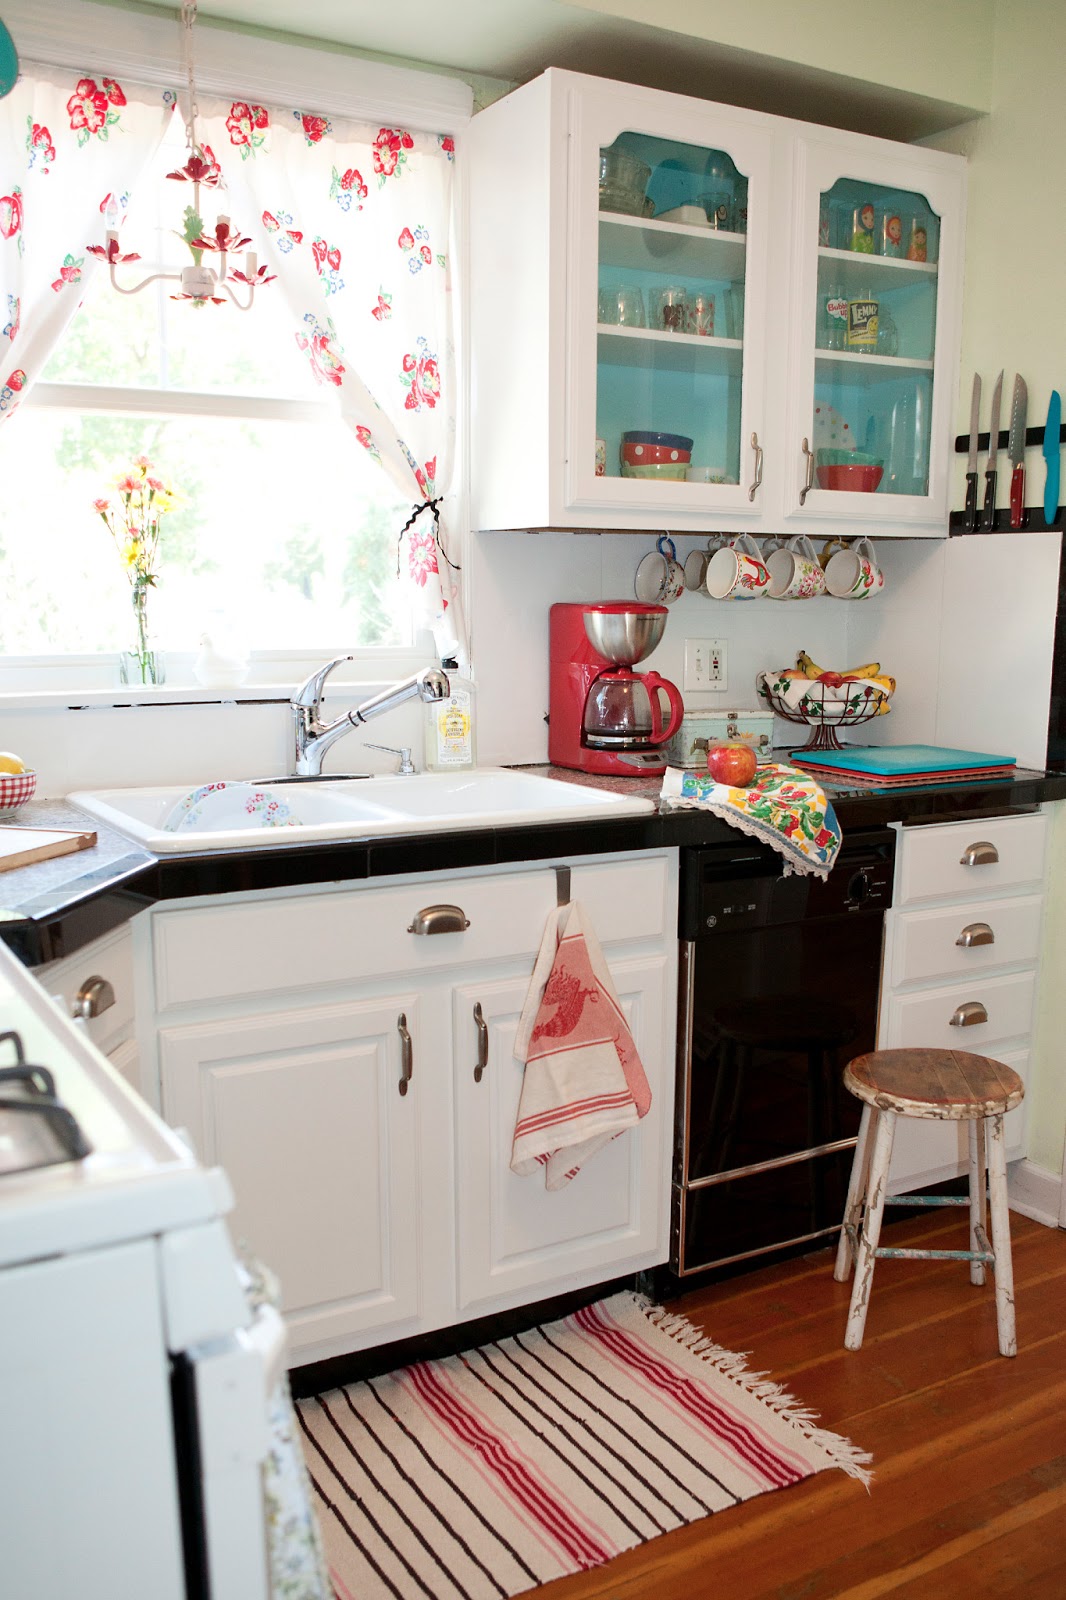 Sort Of Fairytale: Budget Cottage Kitchen